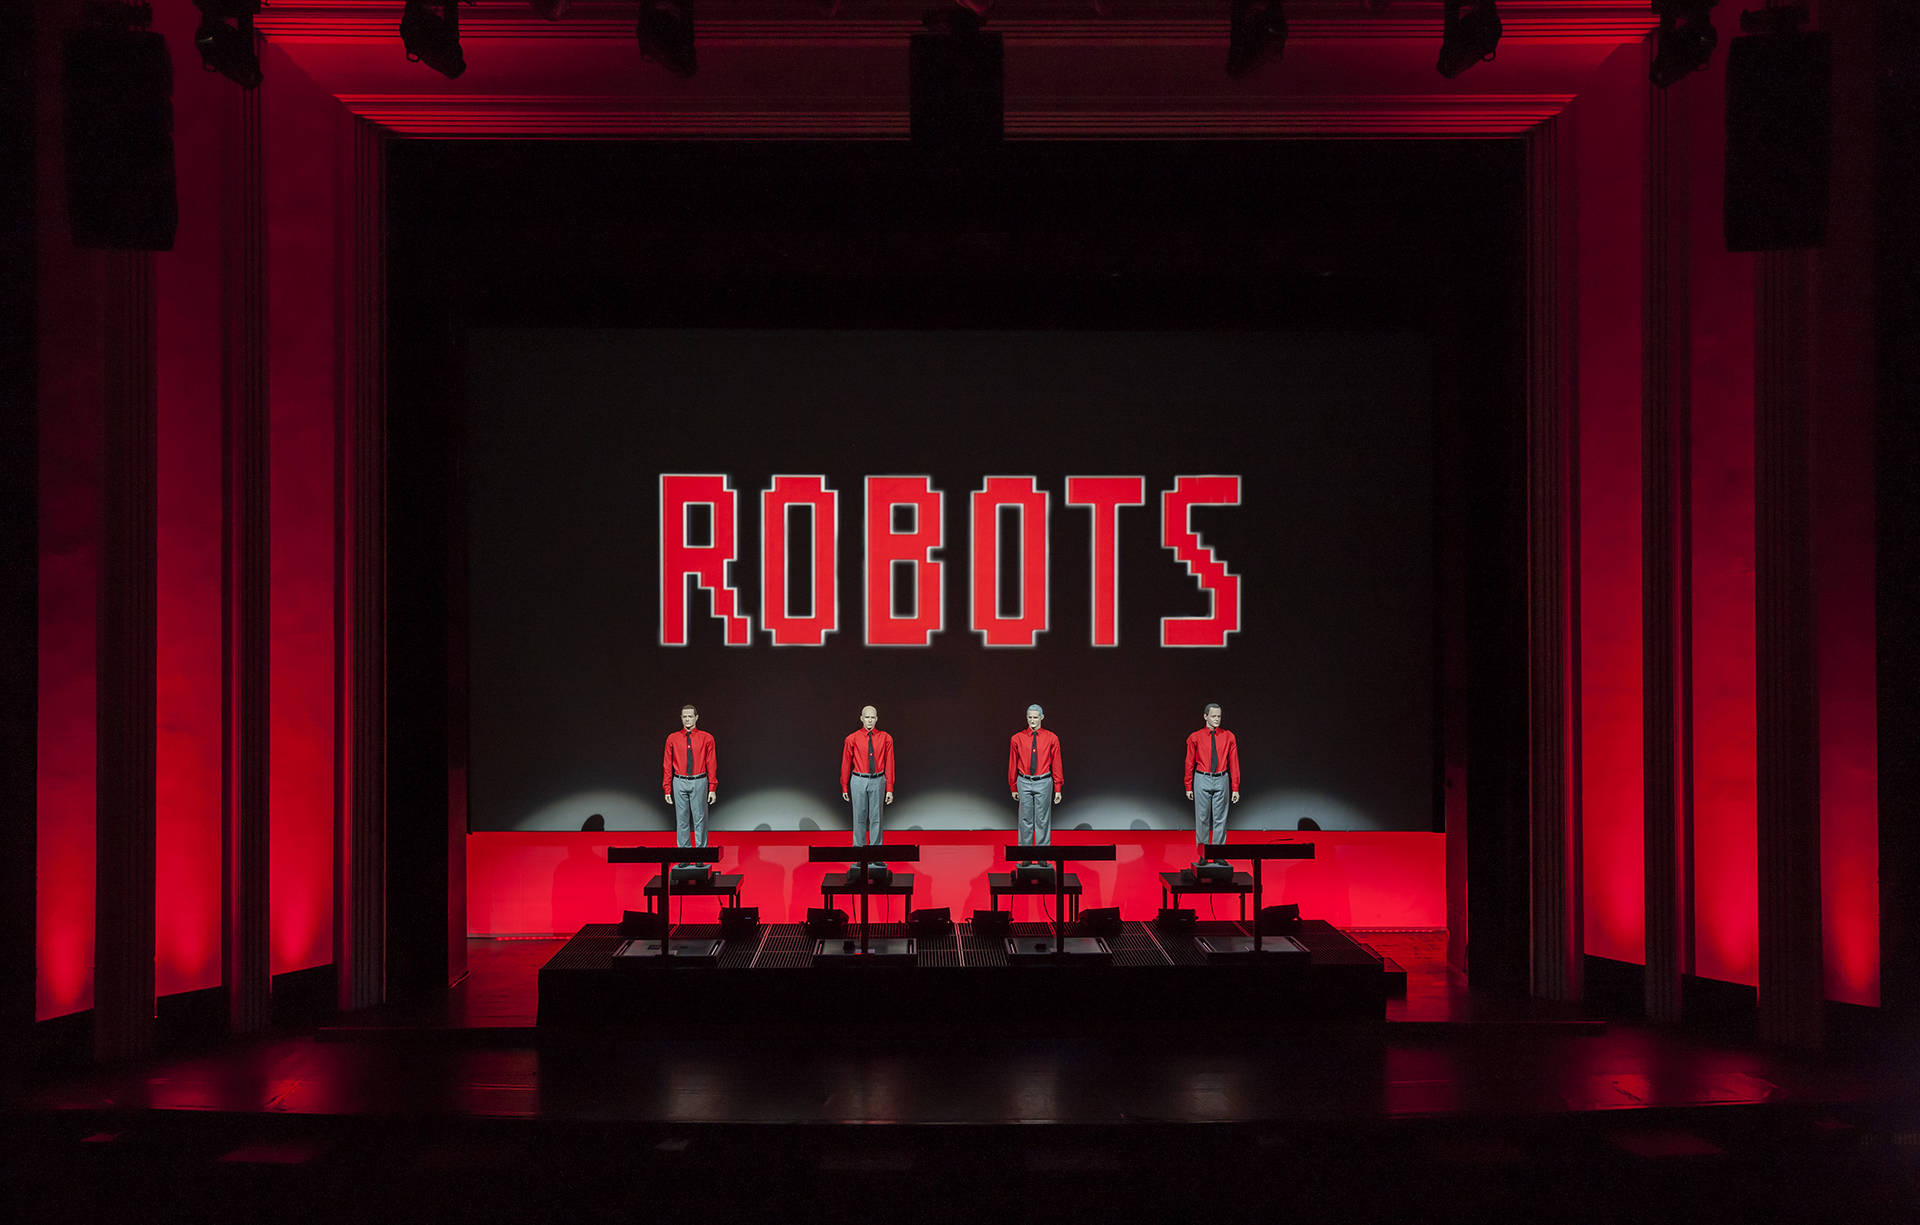 Kraftwerk Robots Live Stage Performance Wallpaper